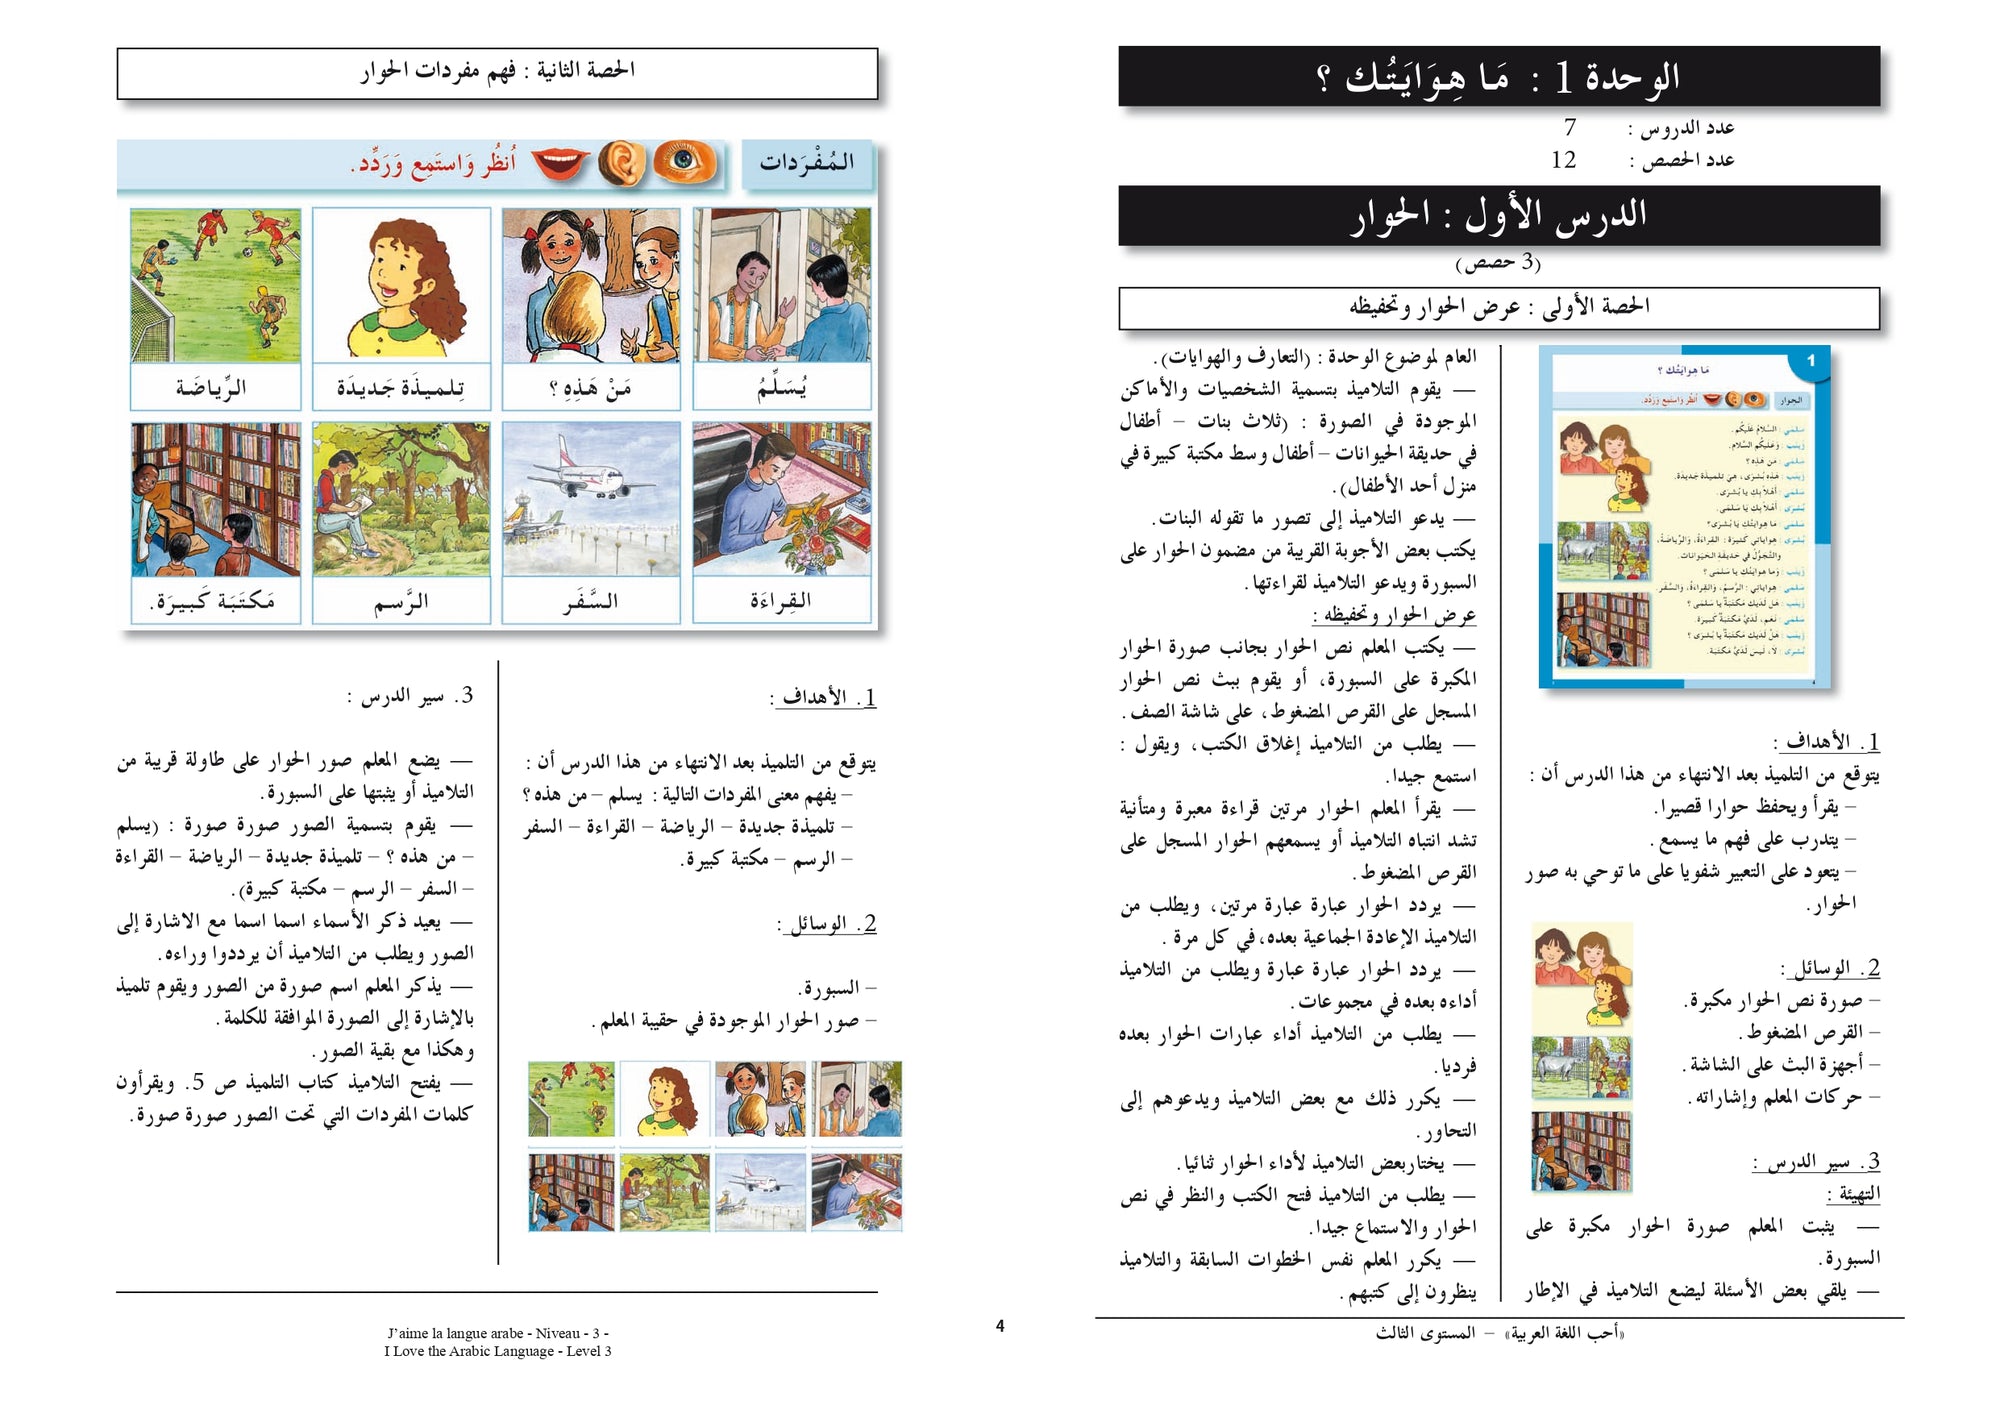 I Love the Arabic Language Teacher Book Level 3